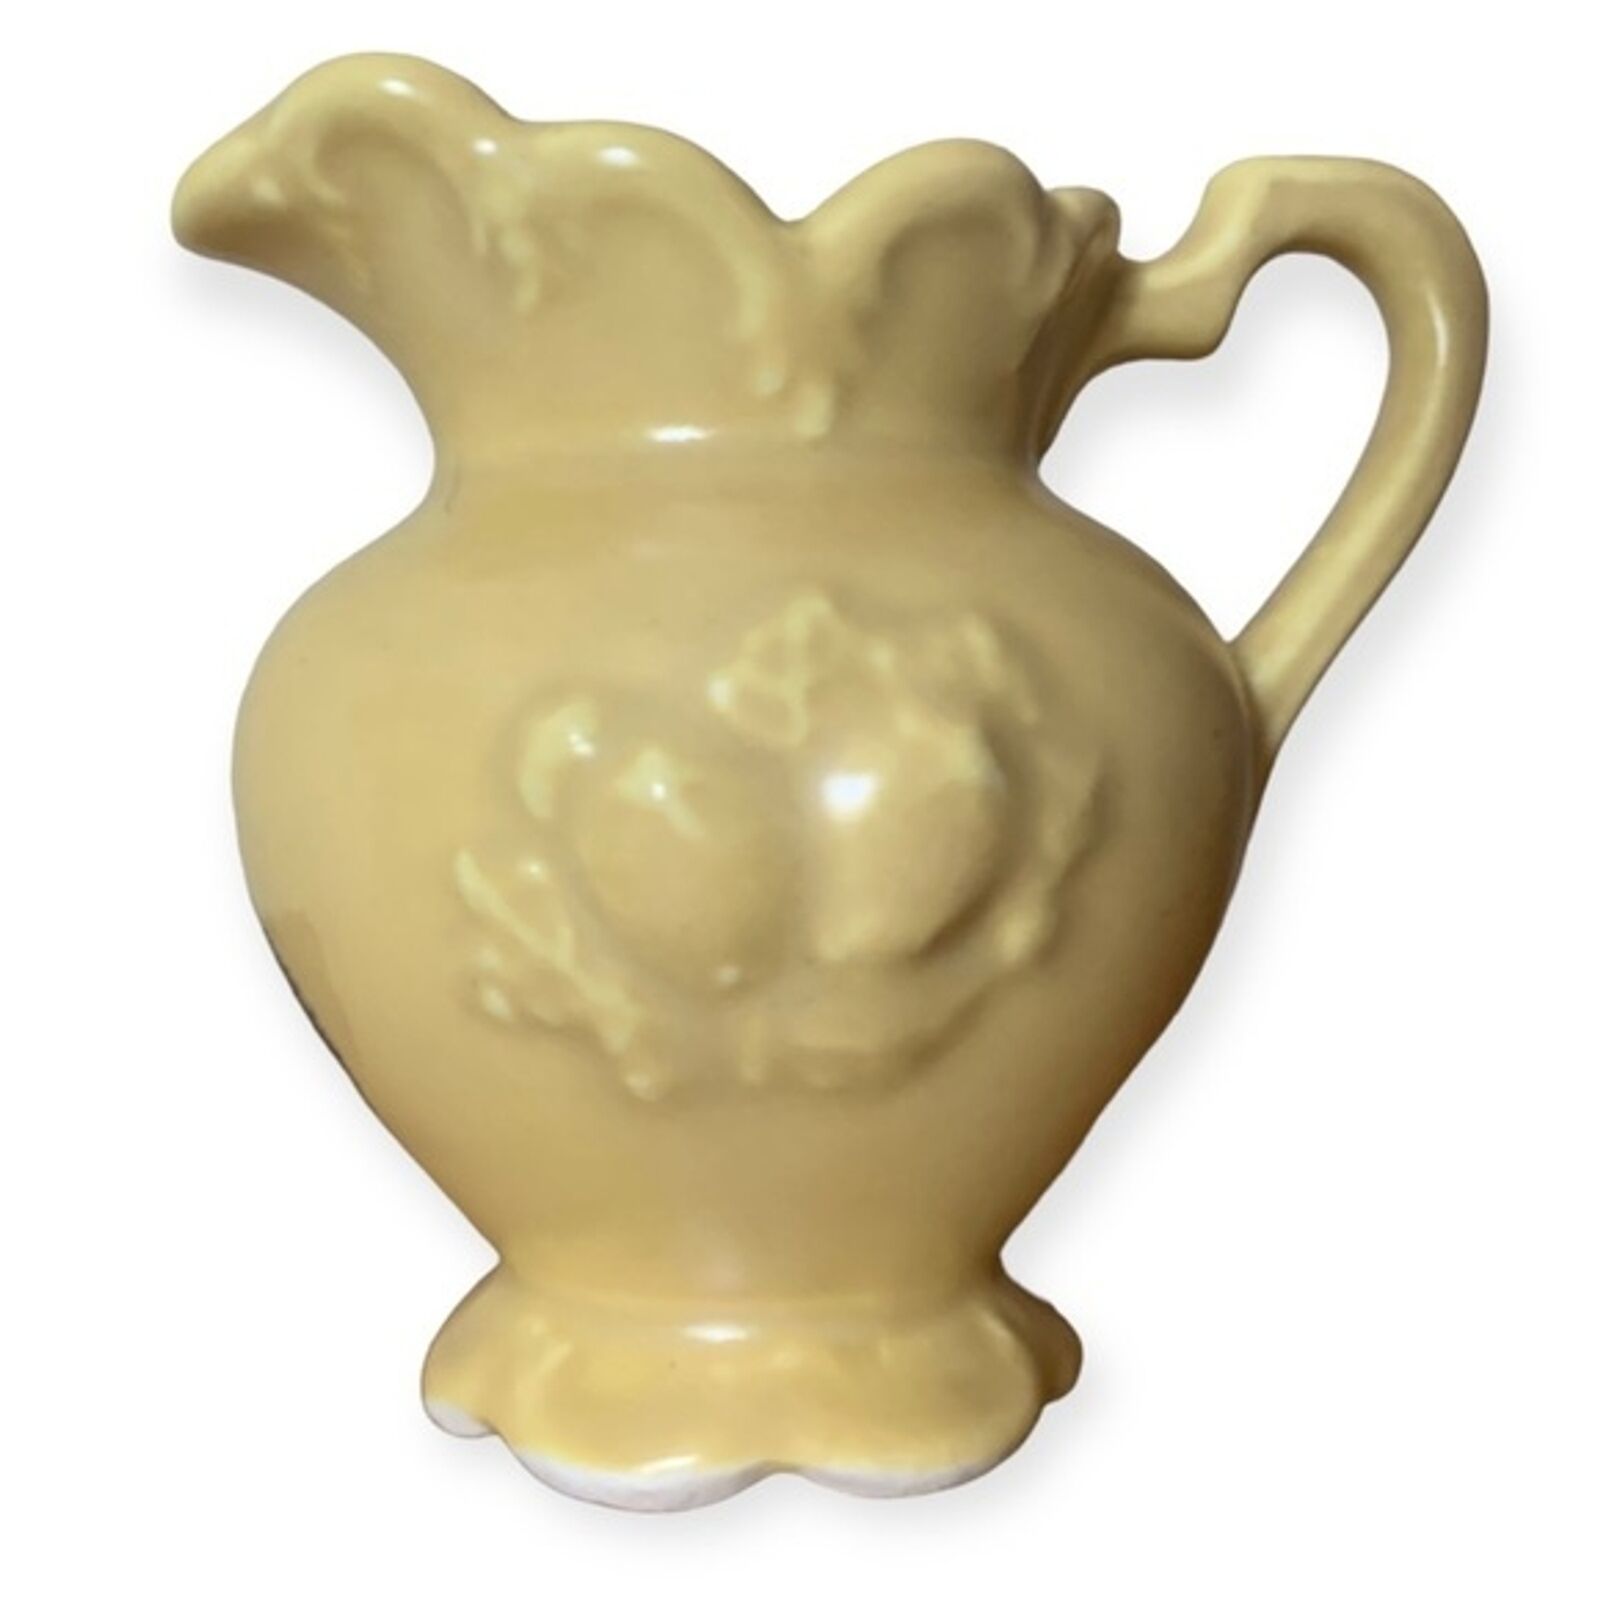 Vintage Camark Deluxe Artware Miniature Pitcher Vase in Yellow - USA